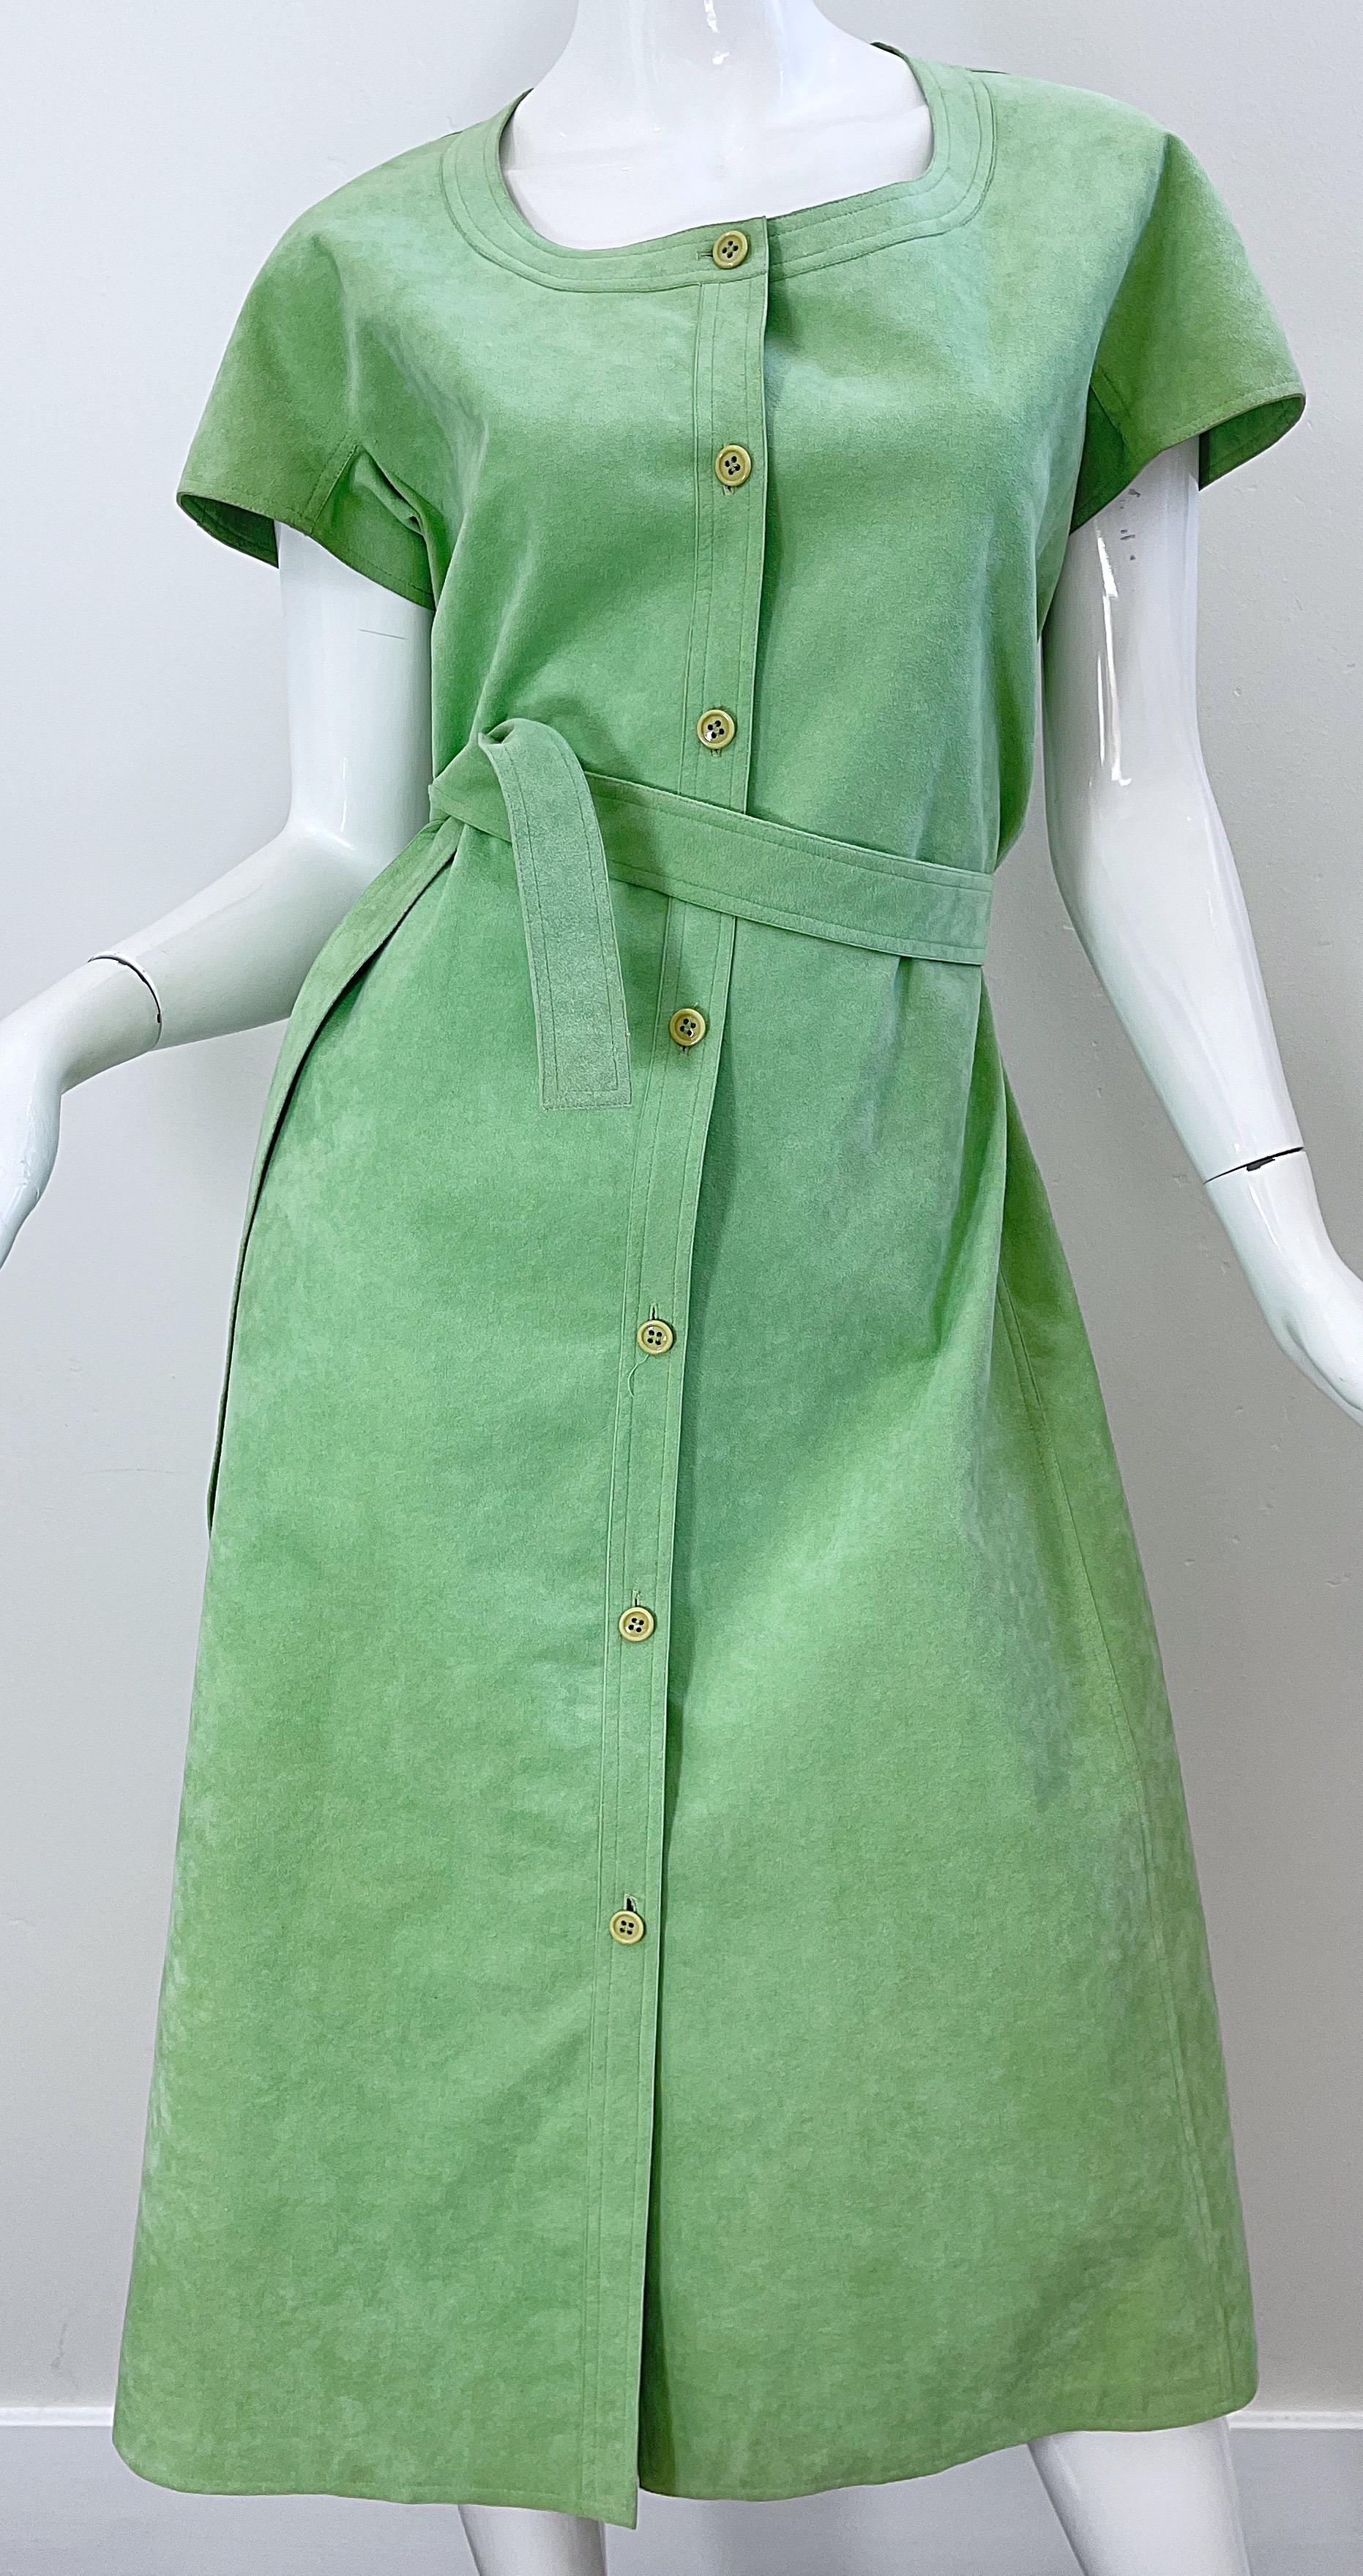 Halston 1970s Pistachio Green Ultra Suede Short Sleeve Vintage 70s Shirt Dress For Sale 2